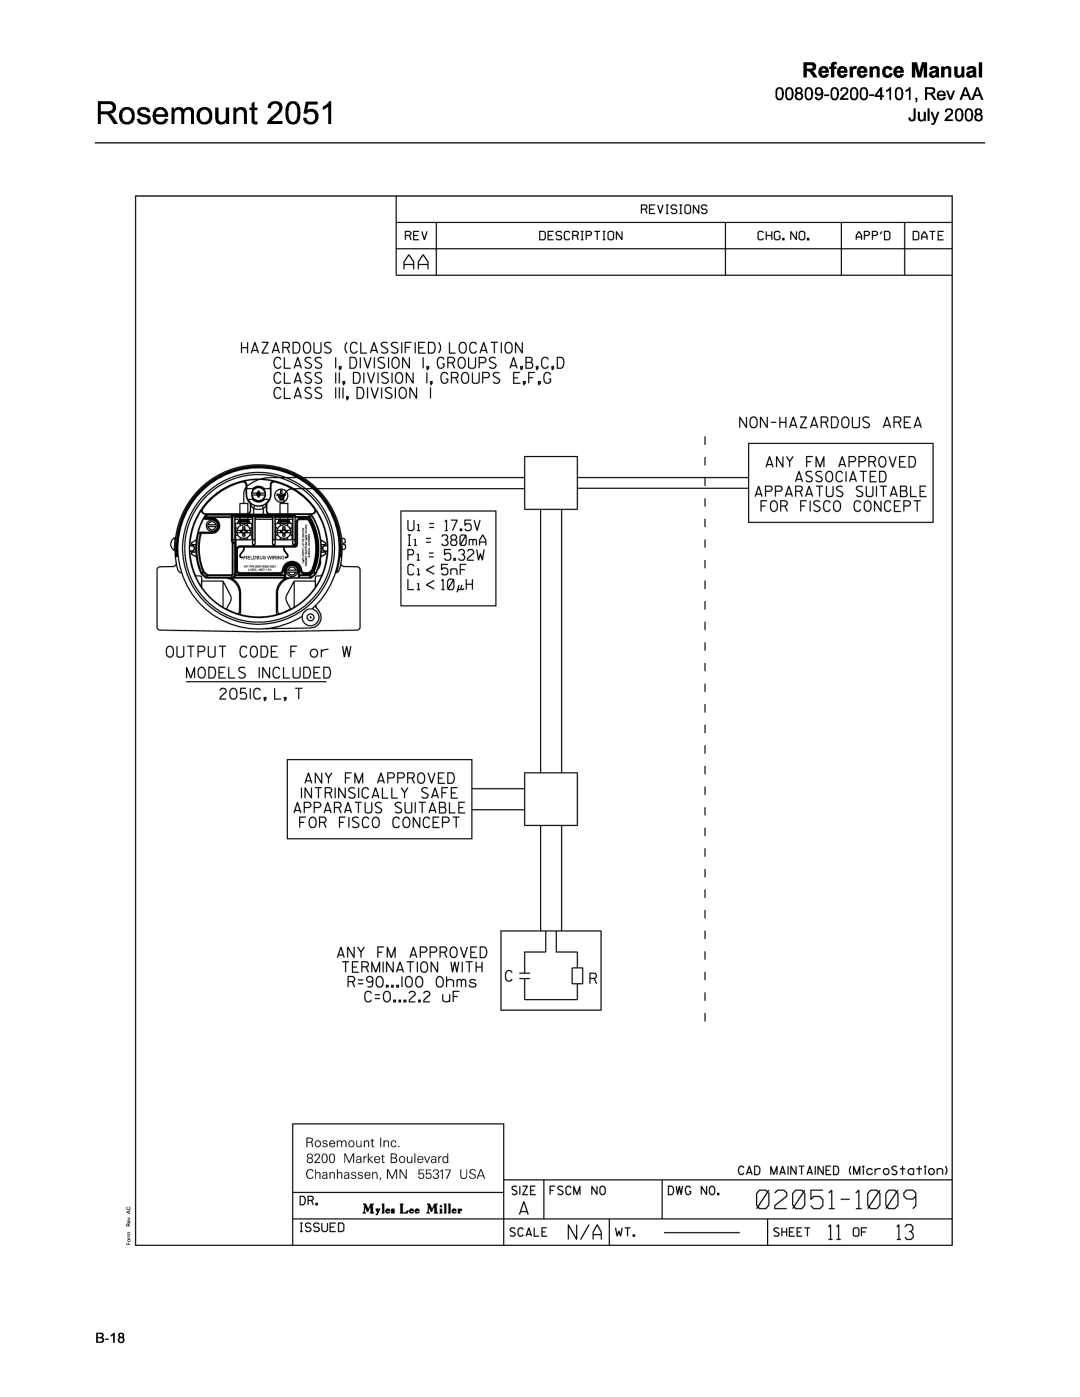 Emerson Process Management 2051 manual Rosemount, Reference Manual, B-18 